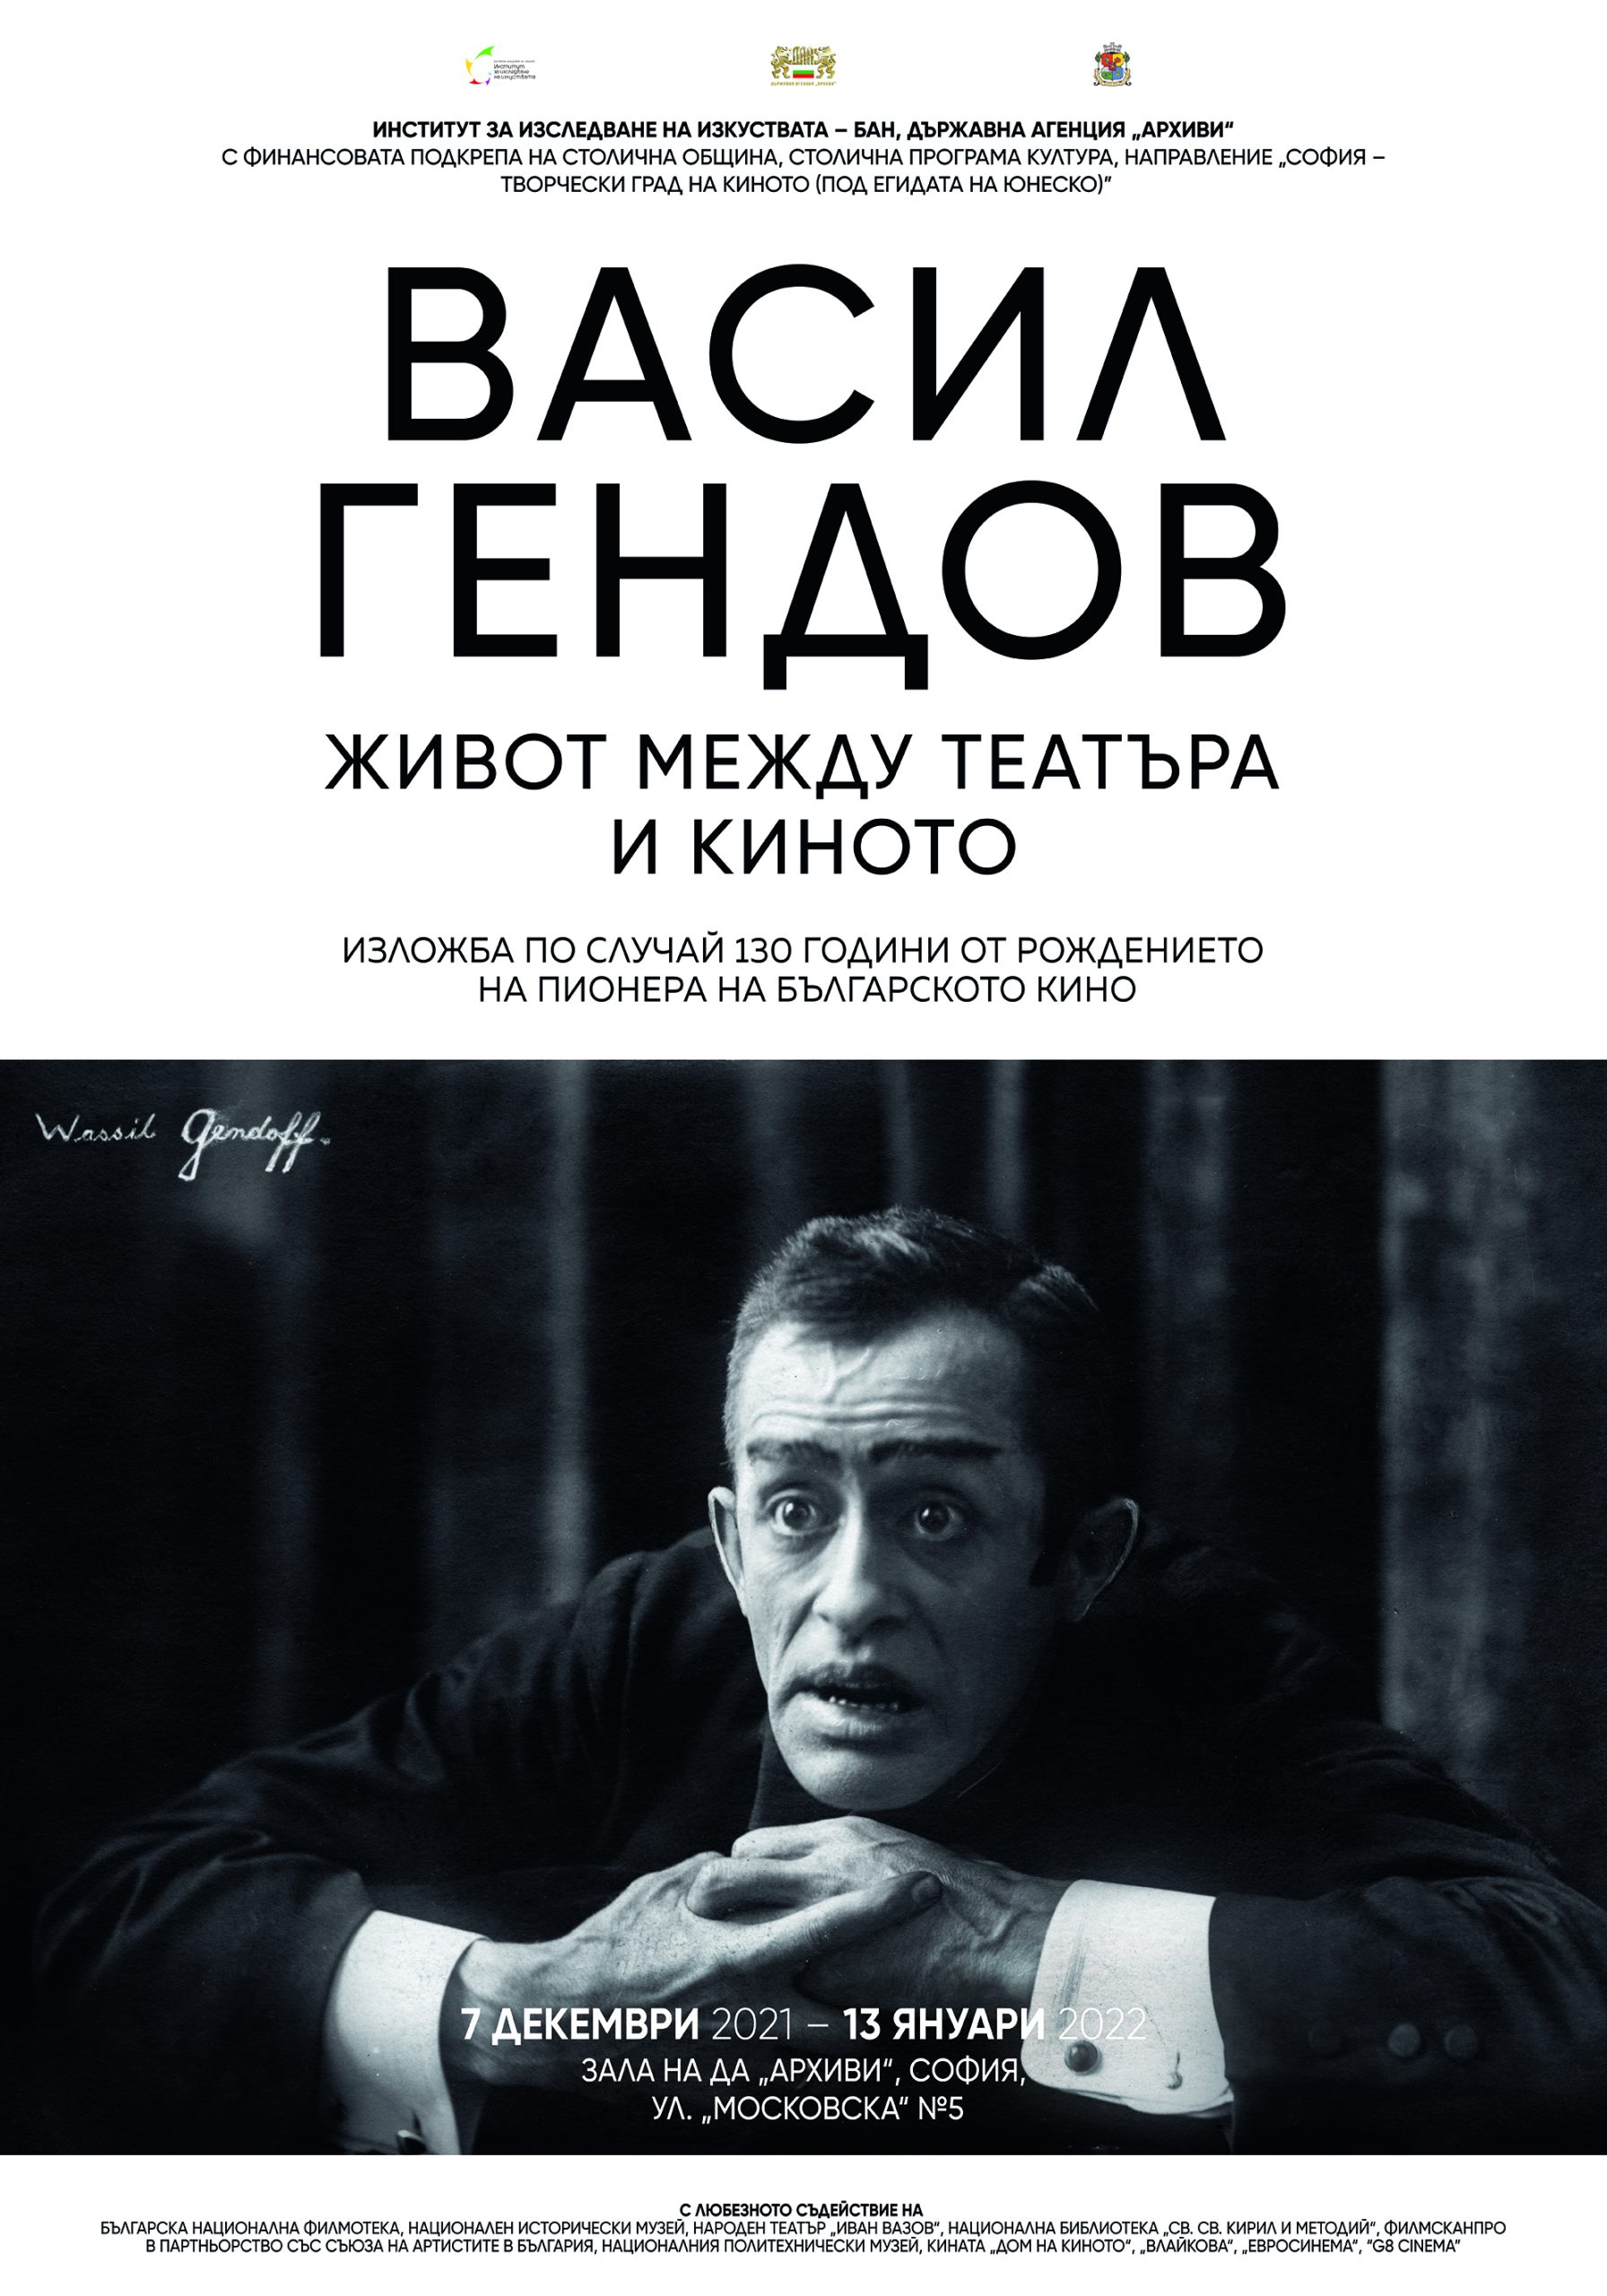 Poster_Gendov_cherno-byal-Copy-scaled.jpg